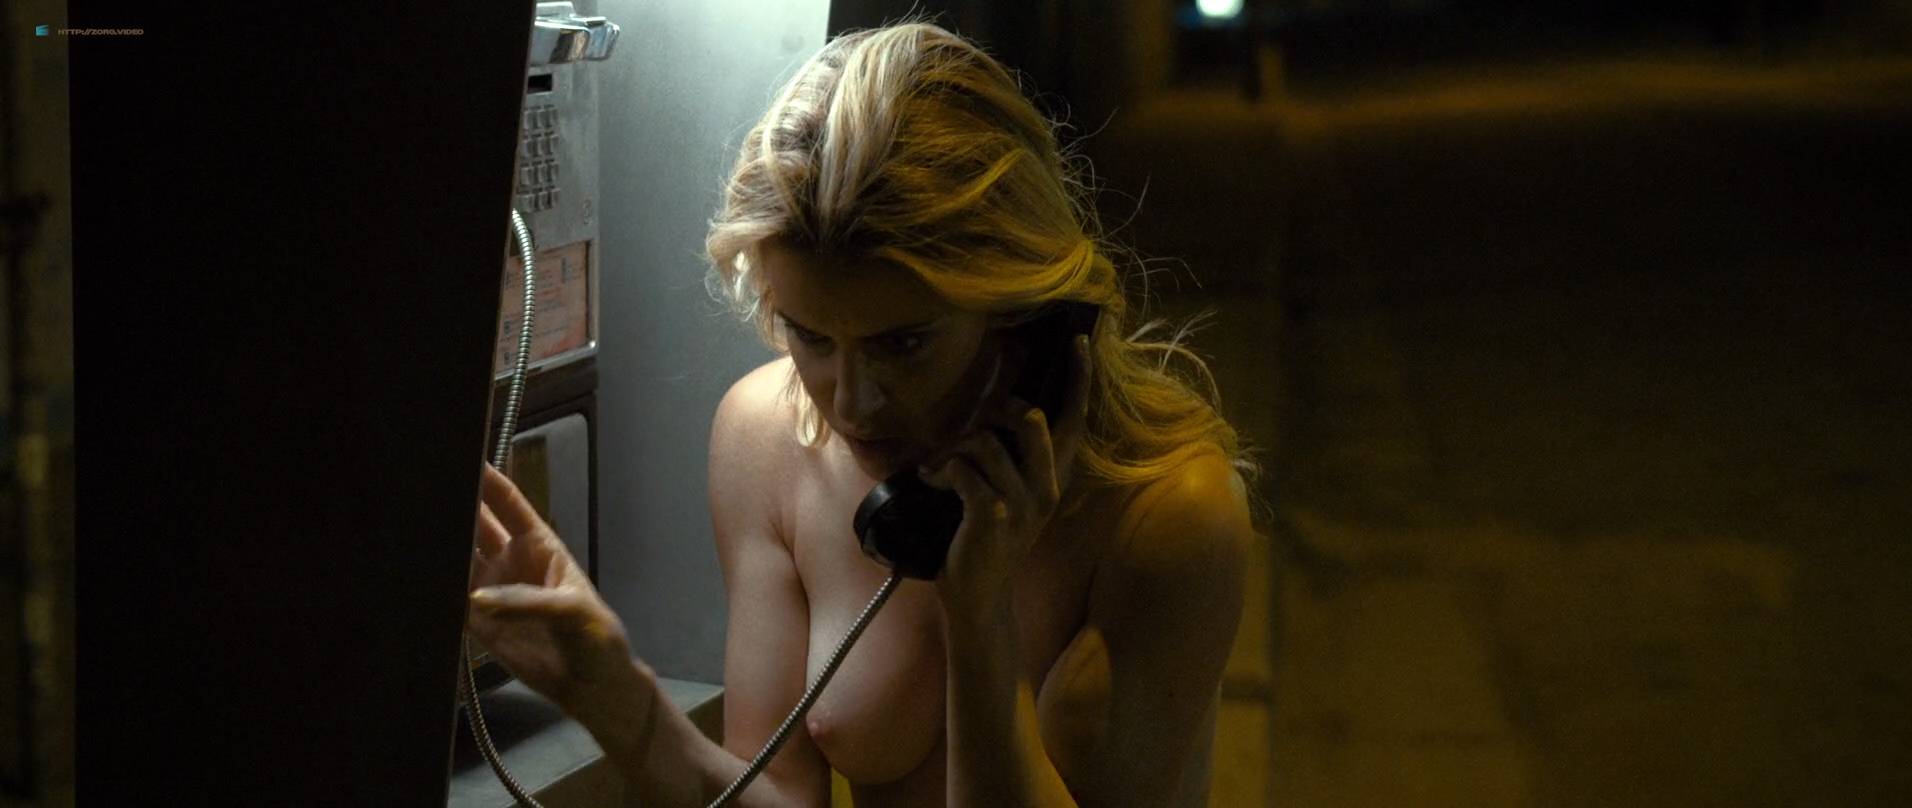 Elisabeth Hower nude topless - Escape Room (2017) HD 1080p WEB (3)